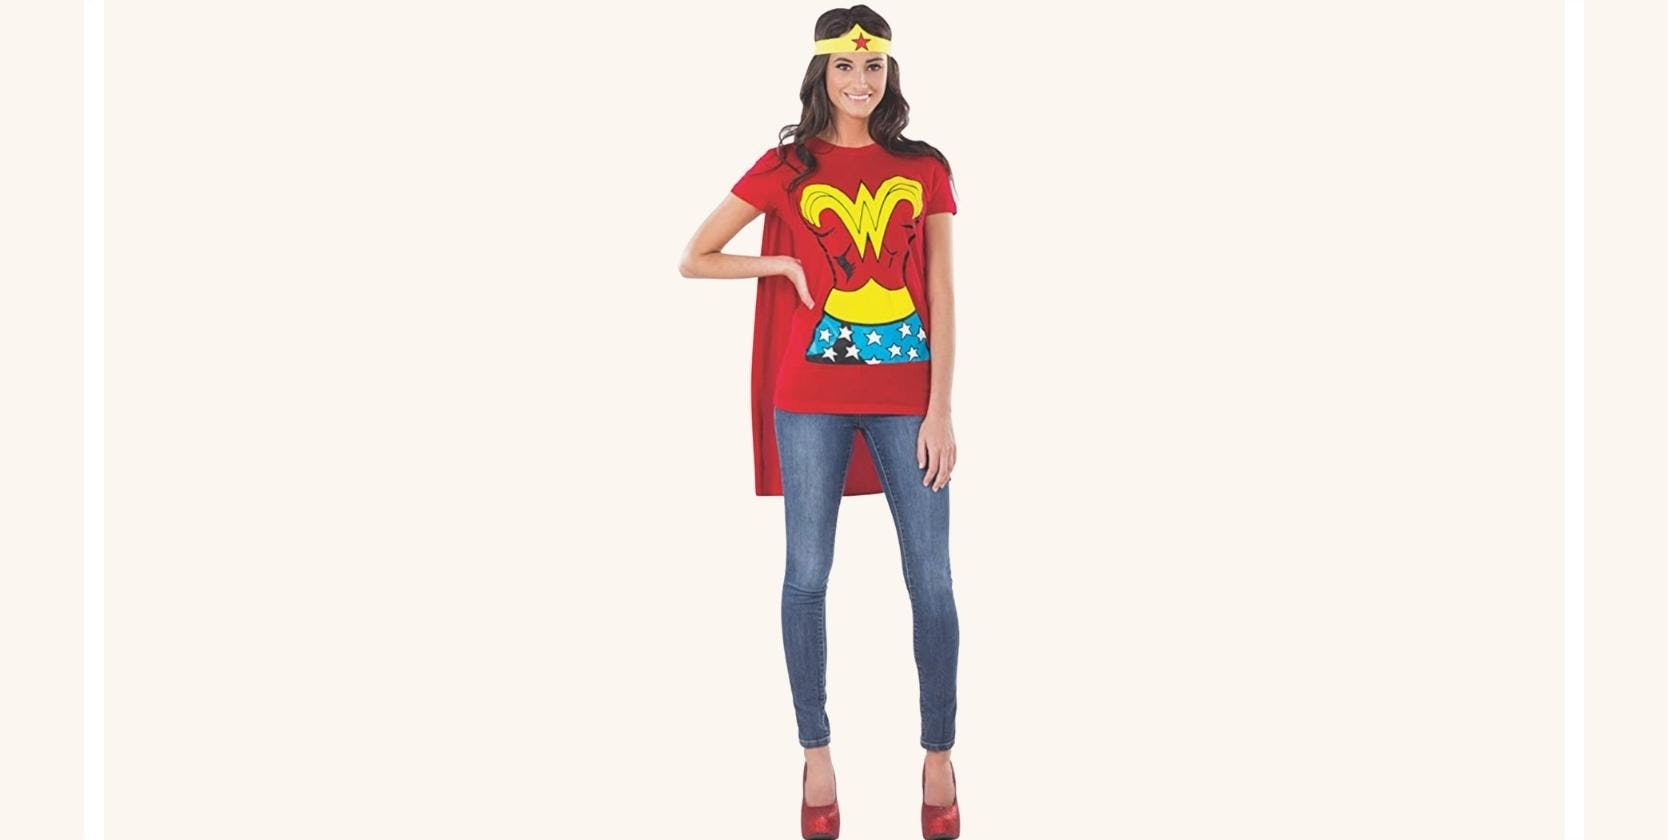 A woman wearing a Wonder Woman costume.